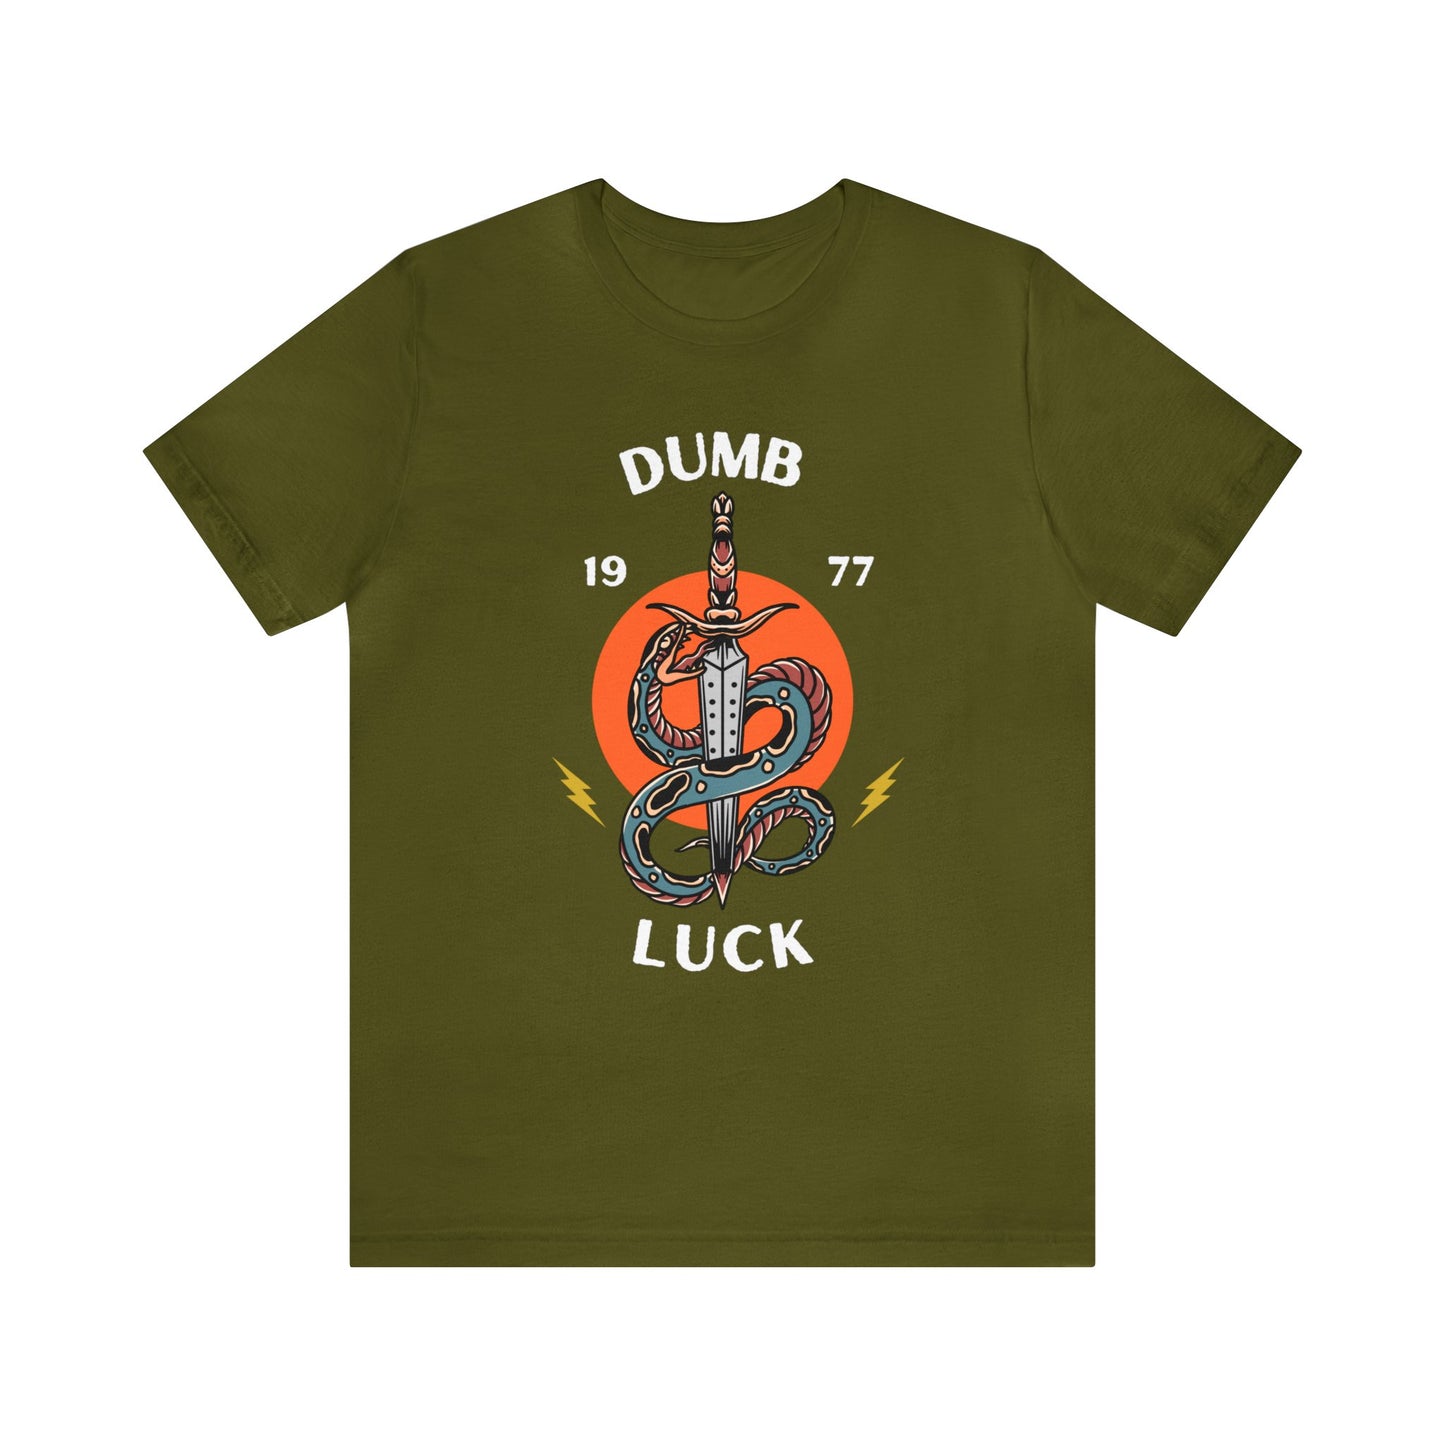 Dumb Luck Tattoo T-shirt / Unisex Vintage American Old School Traditional Tattoo Flash Tee Shirt / Punk Alternative Clothing Tshirt - Foxlark Crystal Jewelry